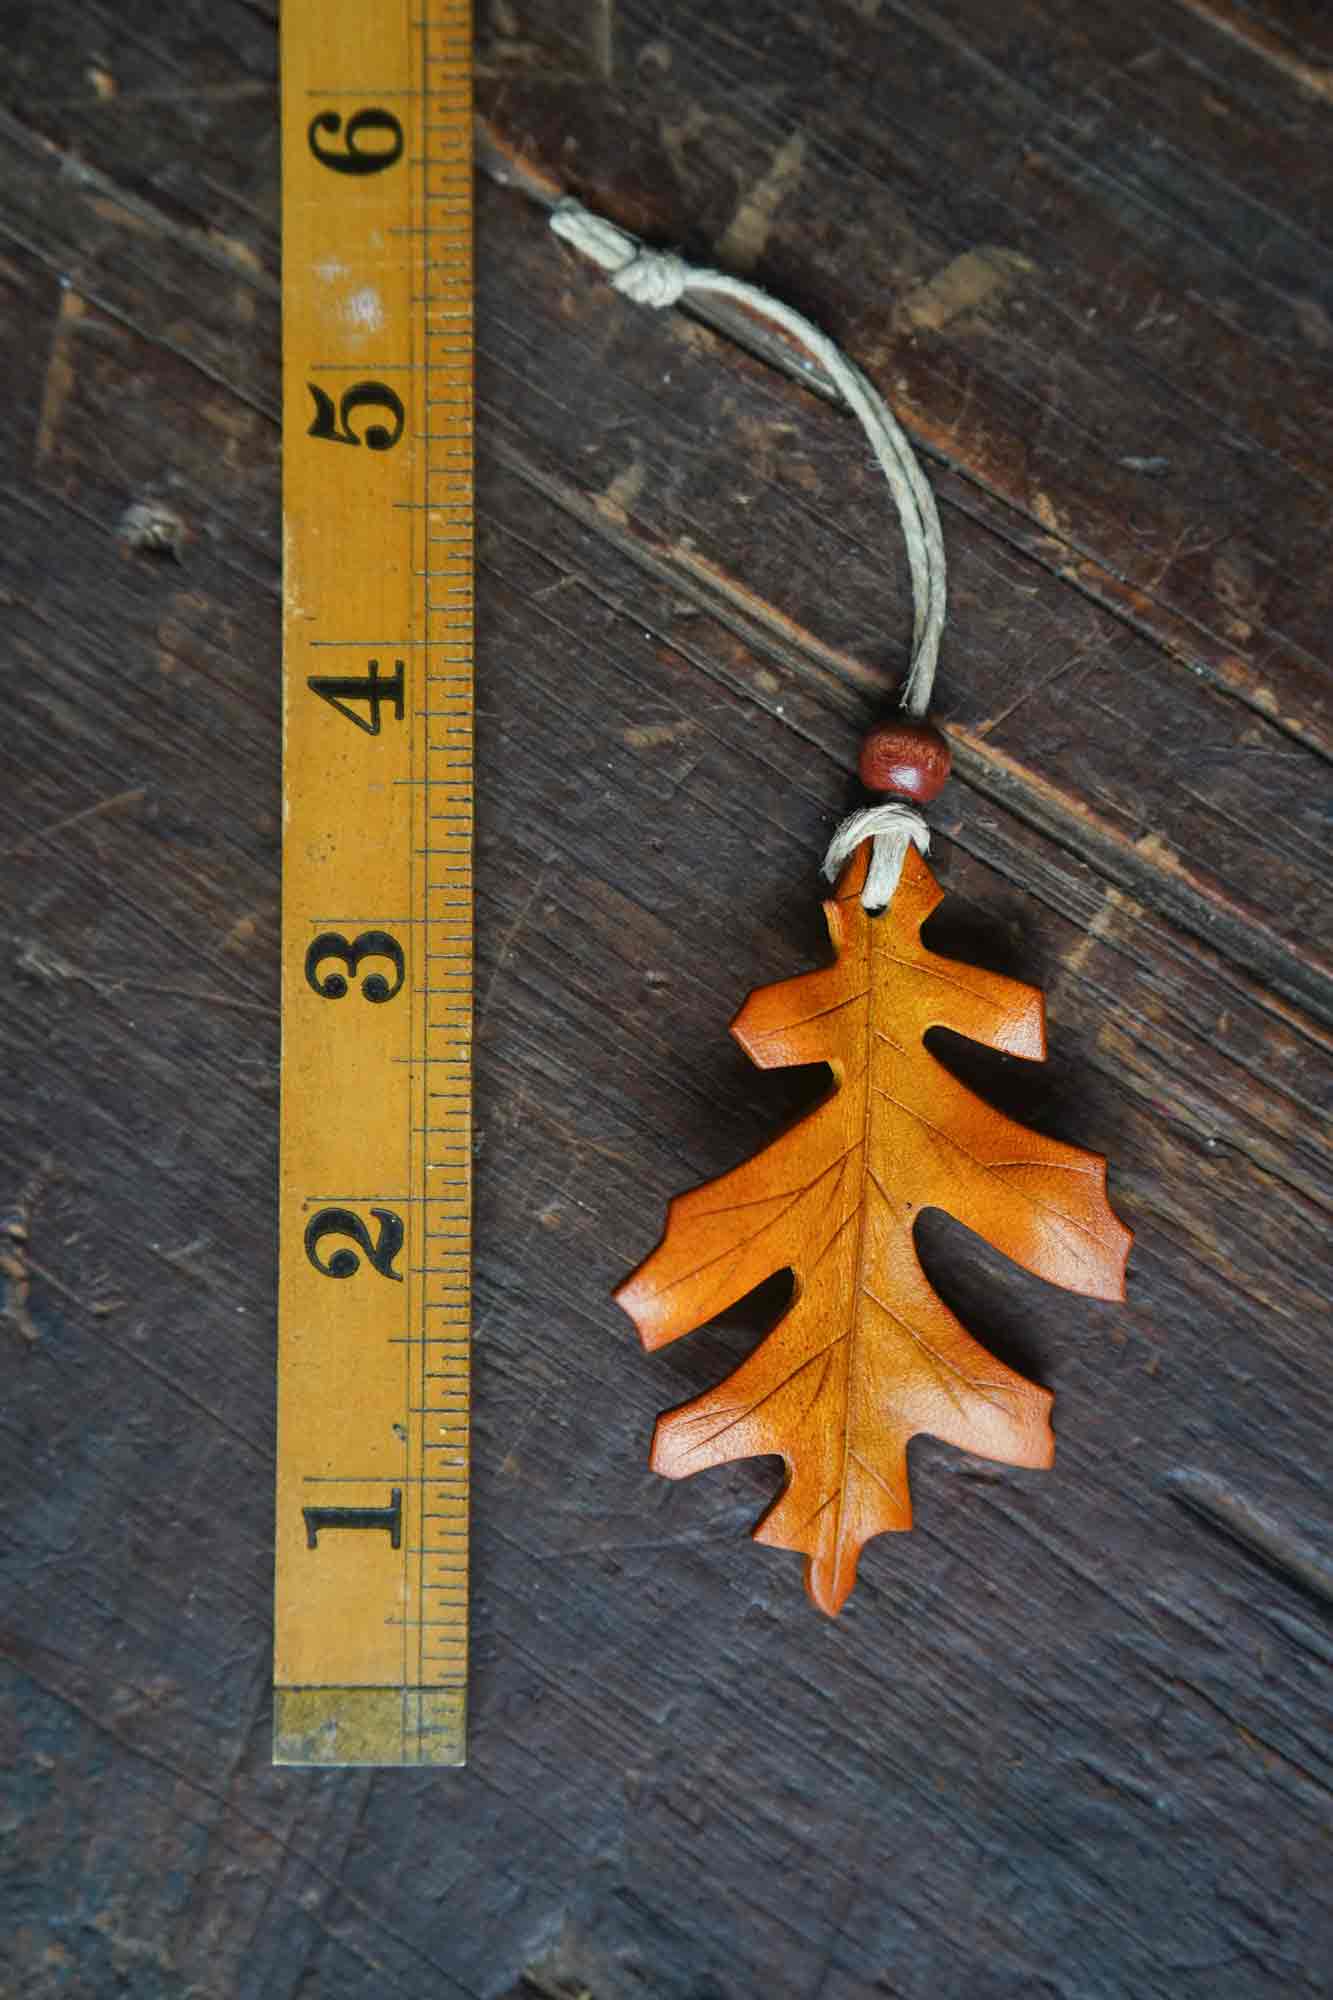 Oak Leaf Leather Ornament